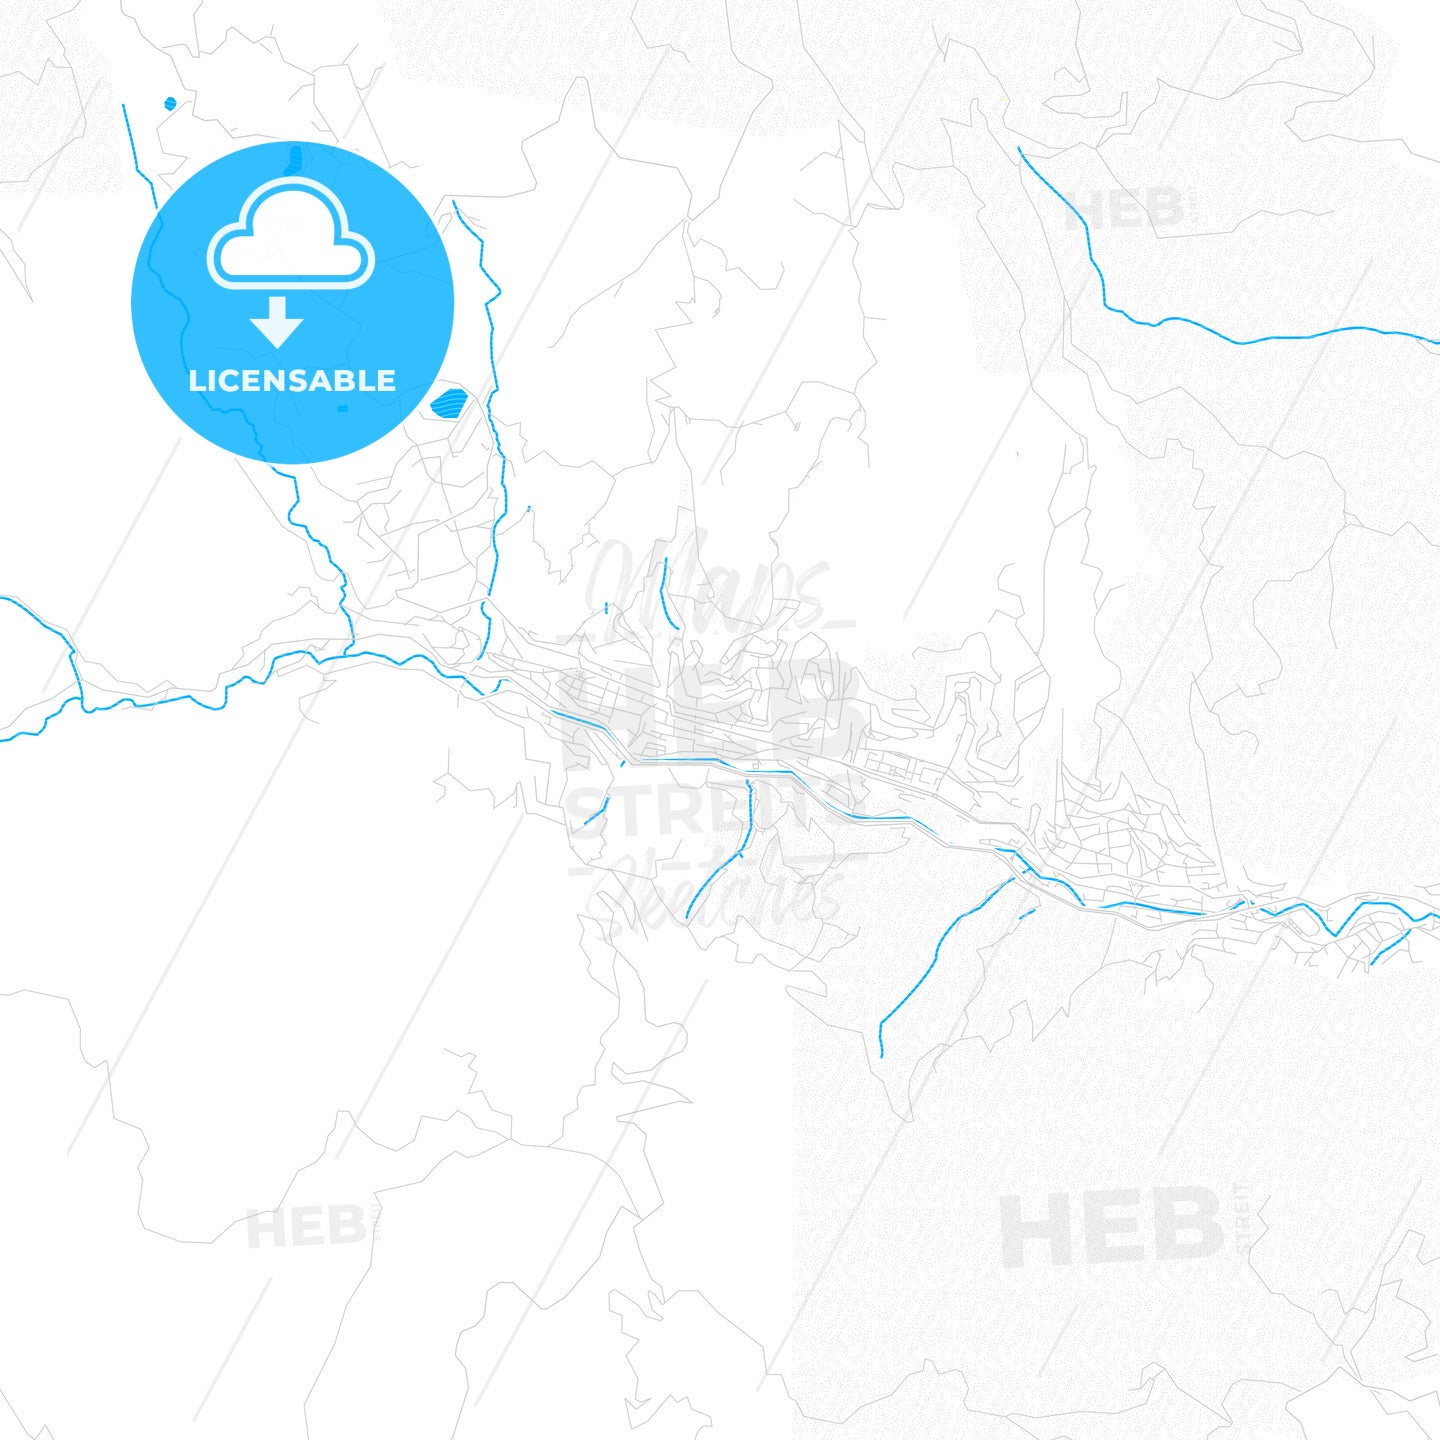 Smolyan, Bulgaria PDF vector map with water in focus